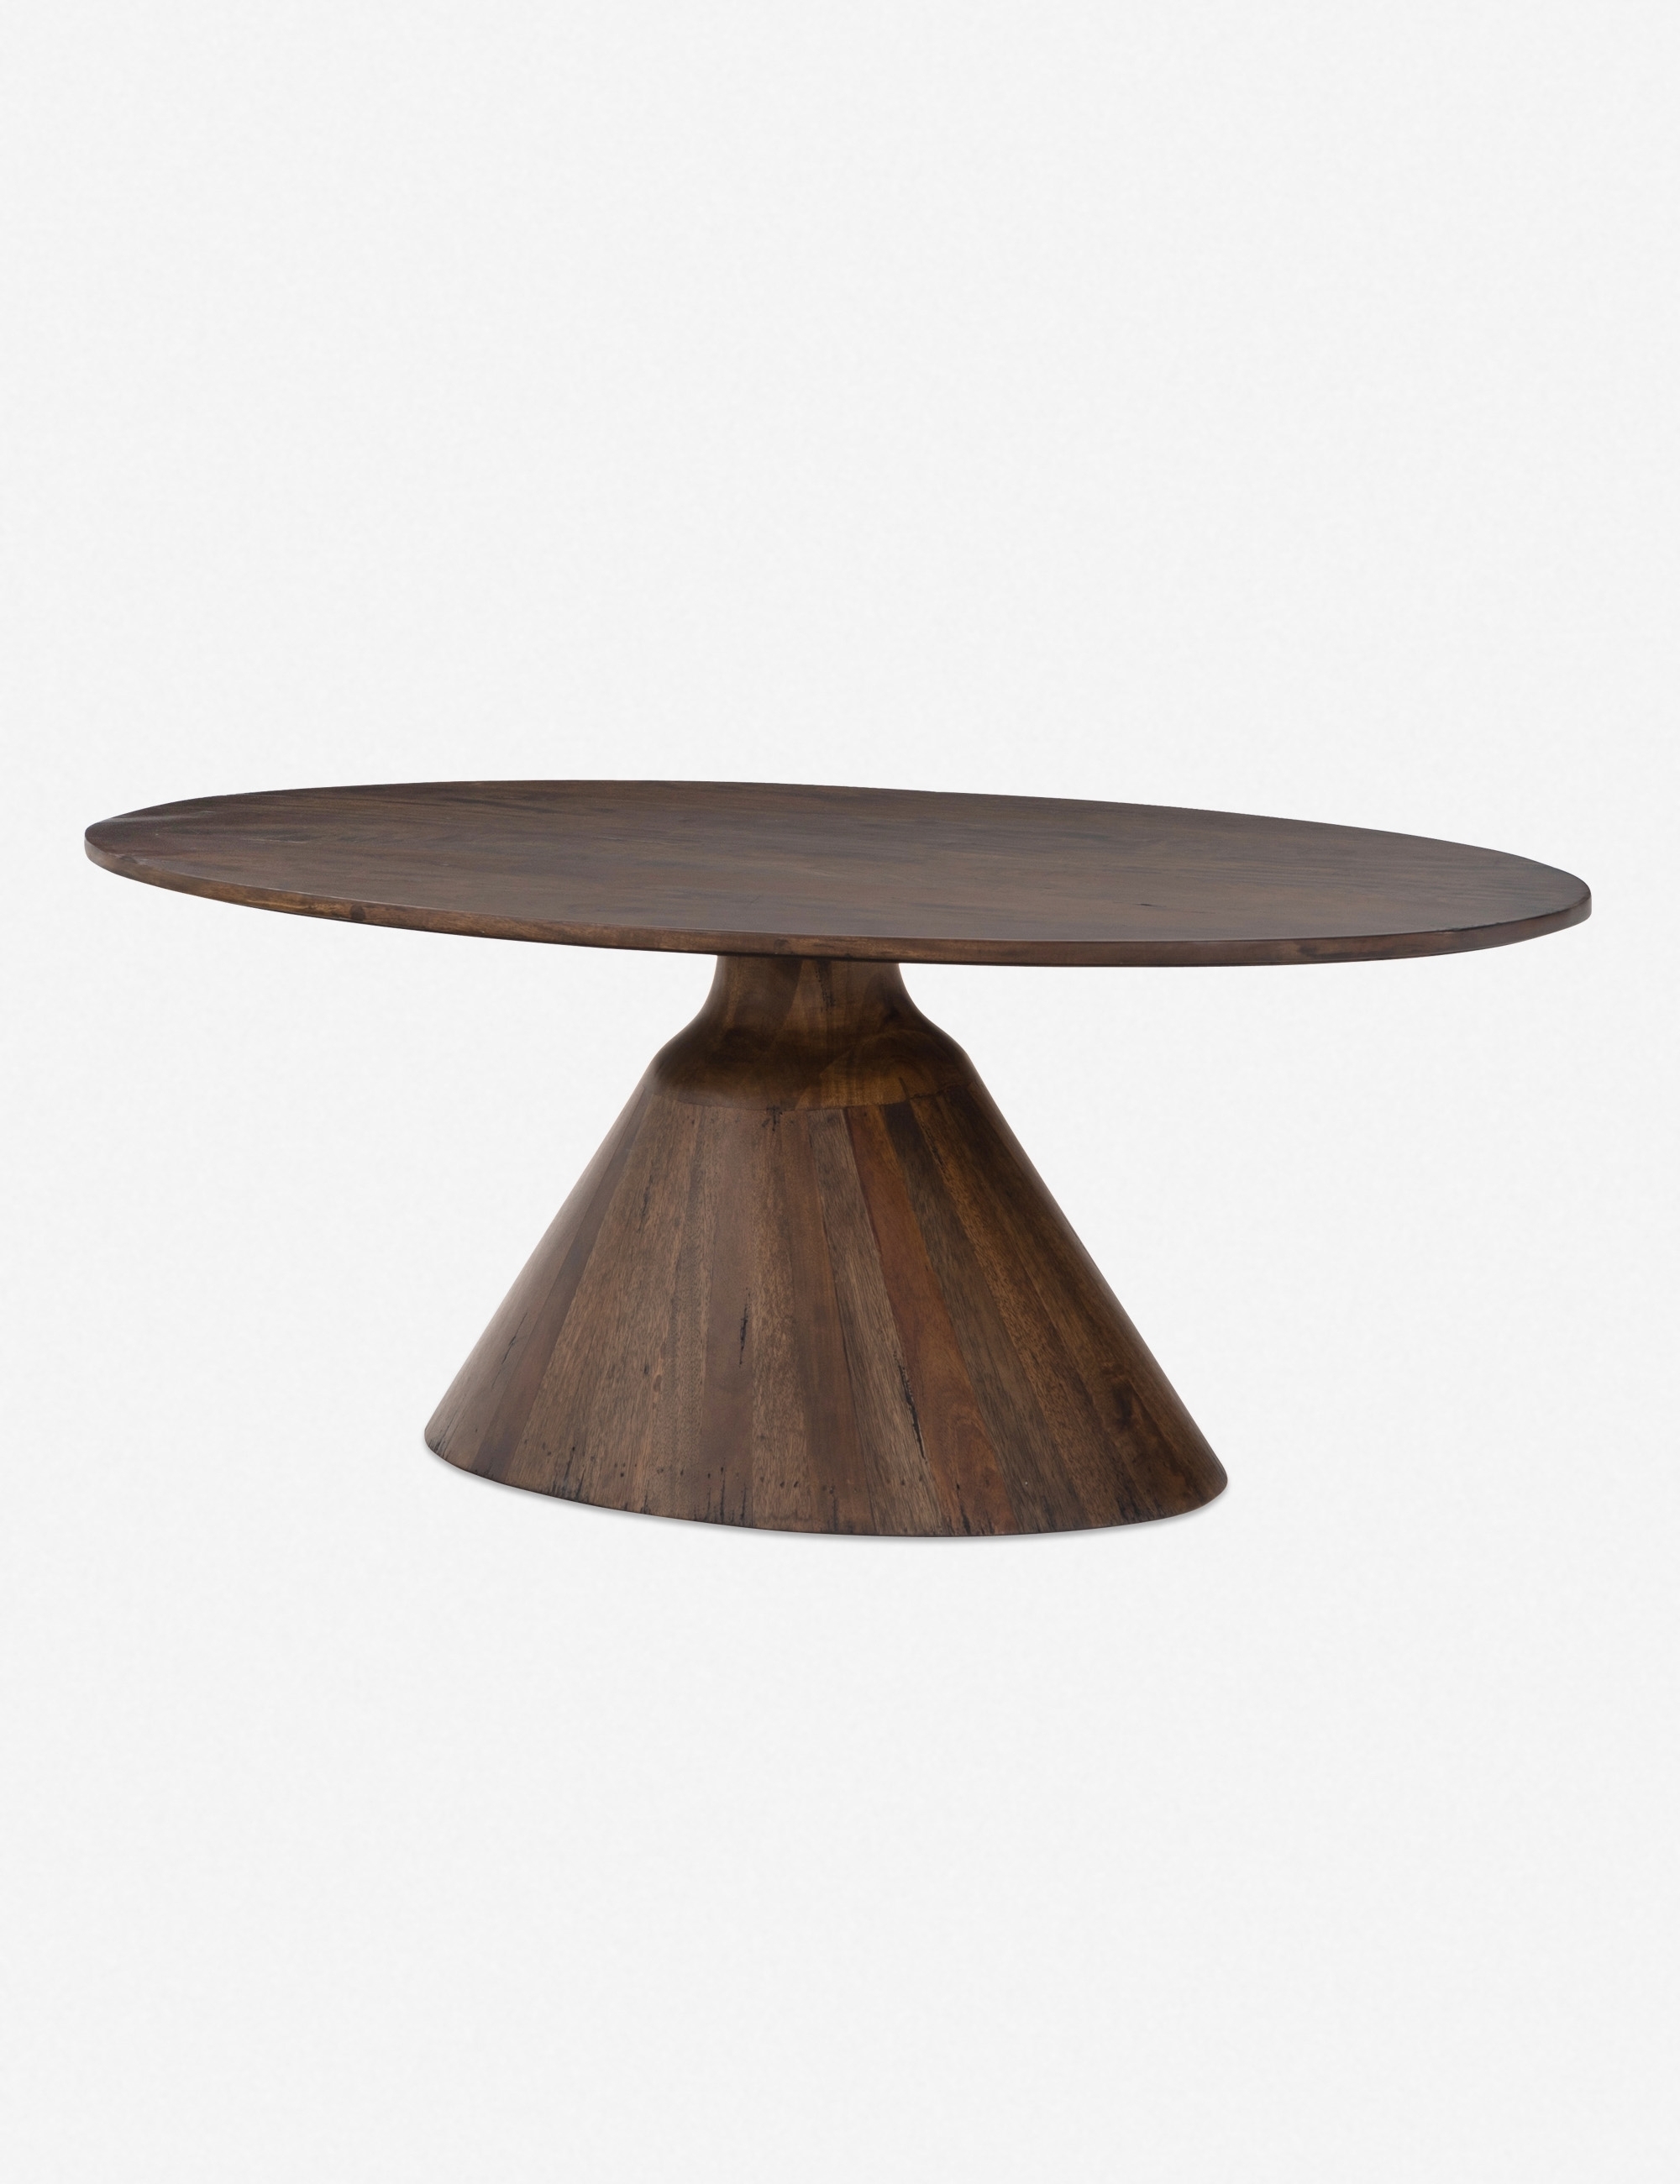 Armand Oval Coffee Table - Image 1